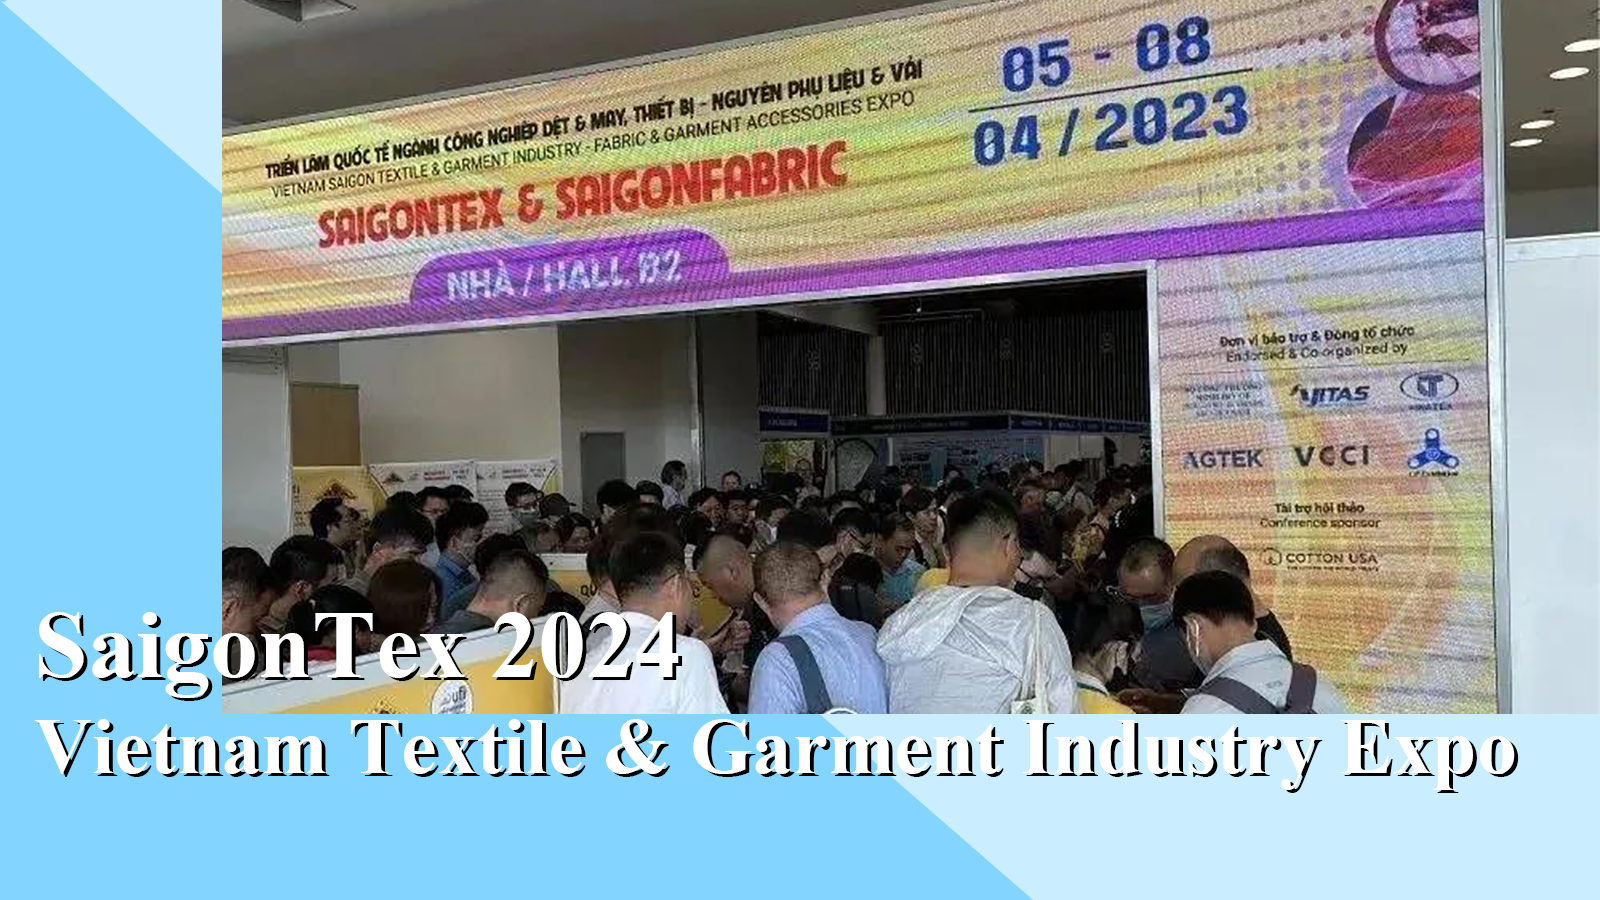 The Analysis of SaigonTex 2024 Vietnam Textile & Garment Industry Expo